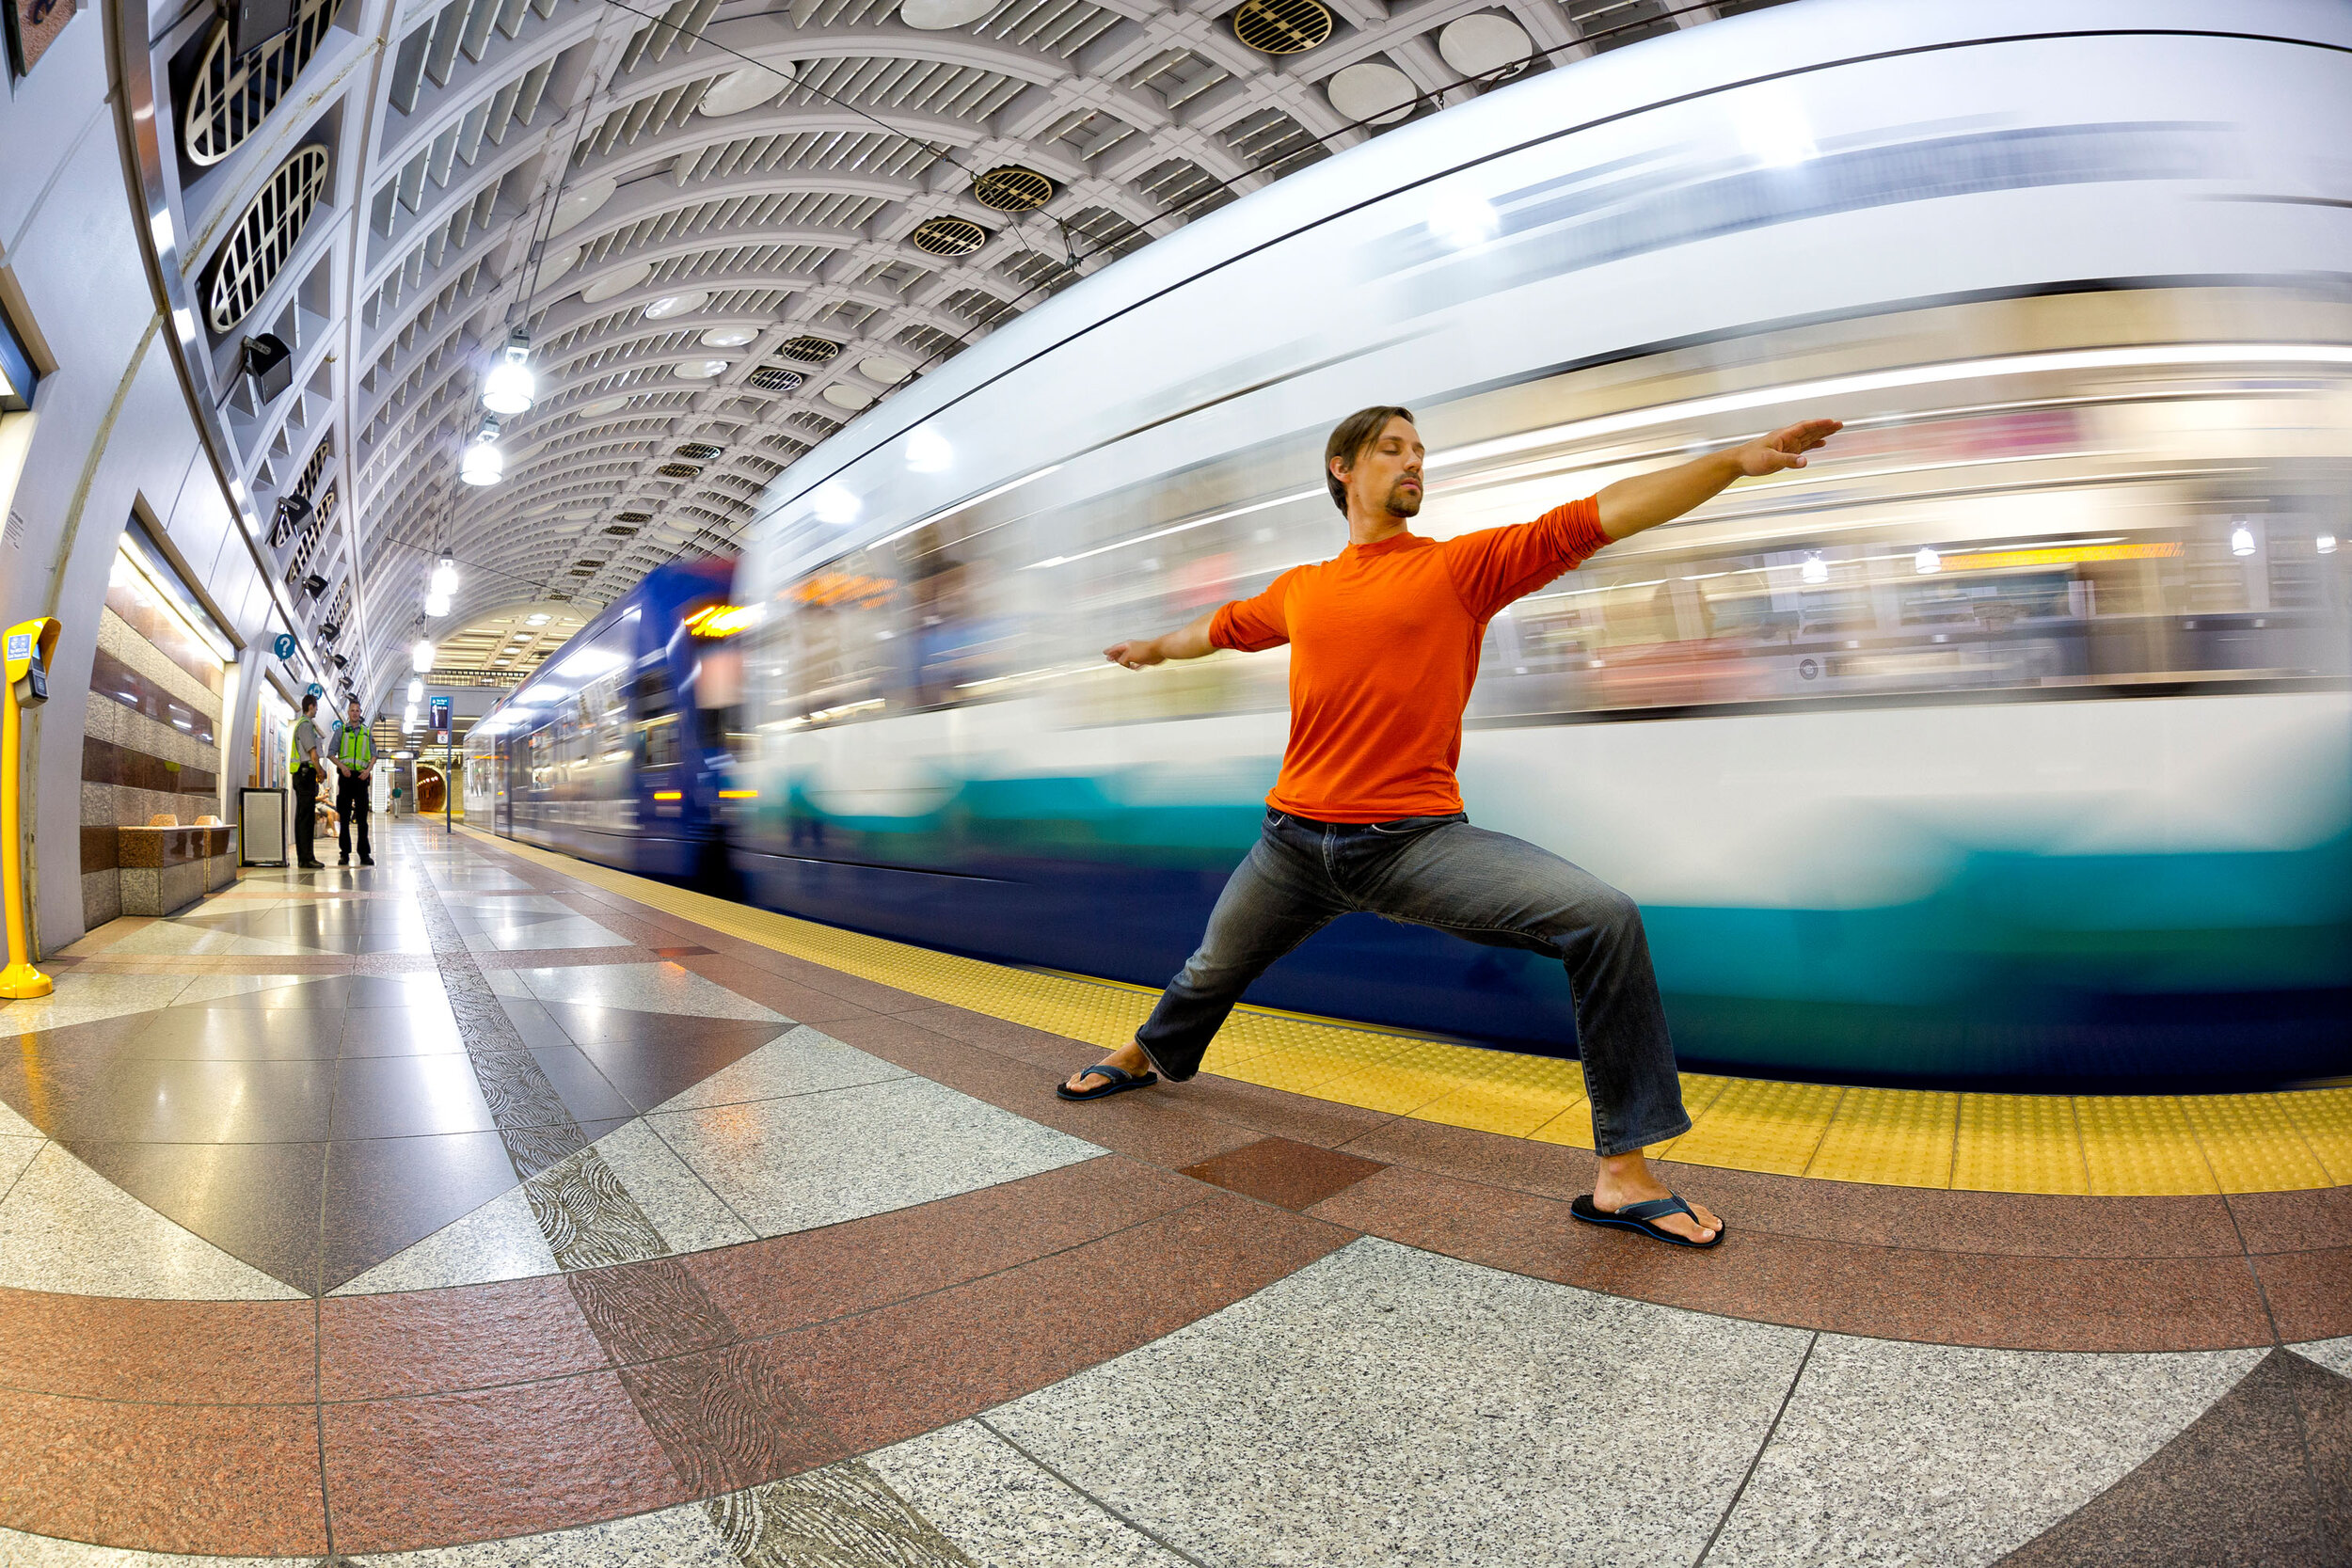  Lifestyle: A man practicing urban yoga in Pioneer Square train tunnel, Seattle, Washington 